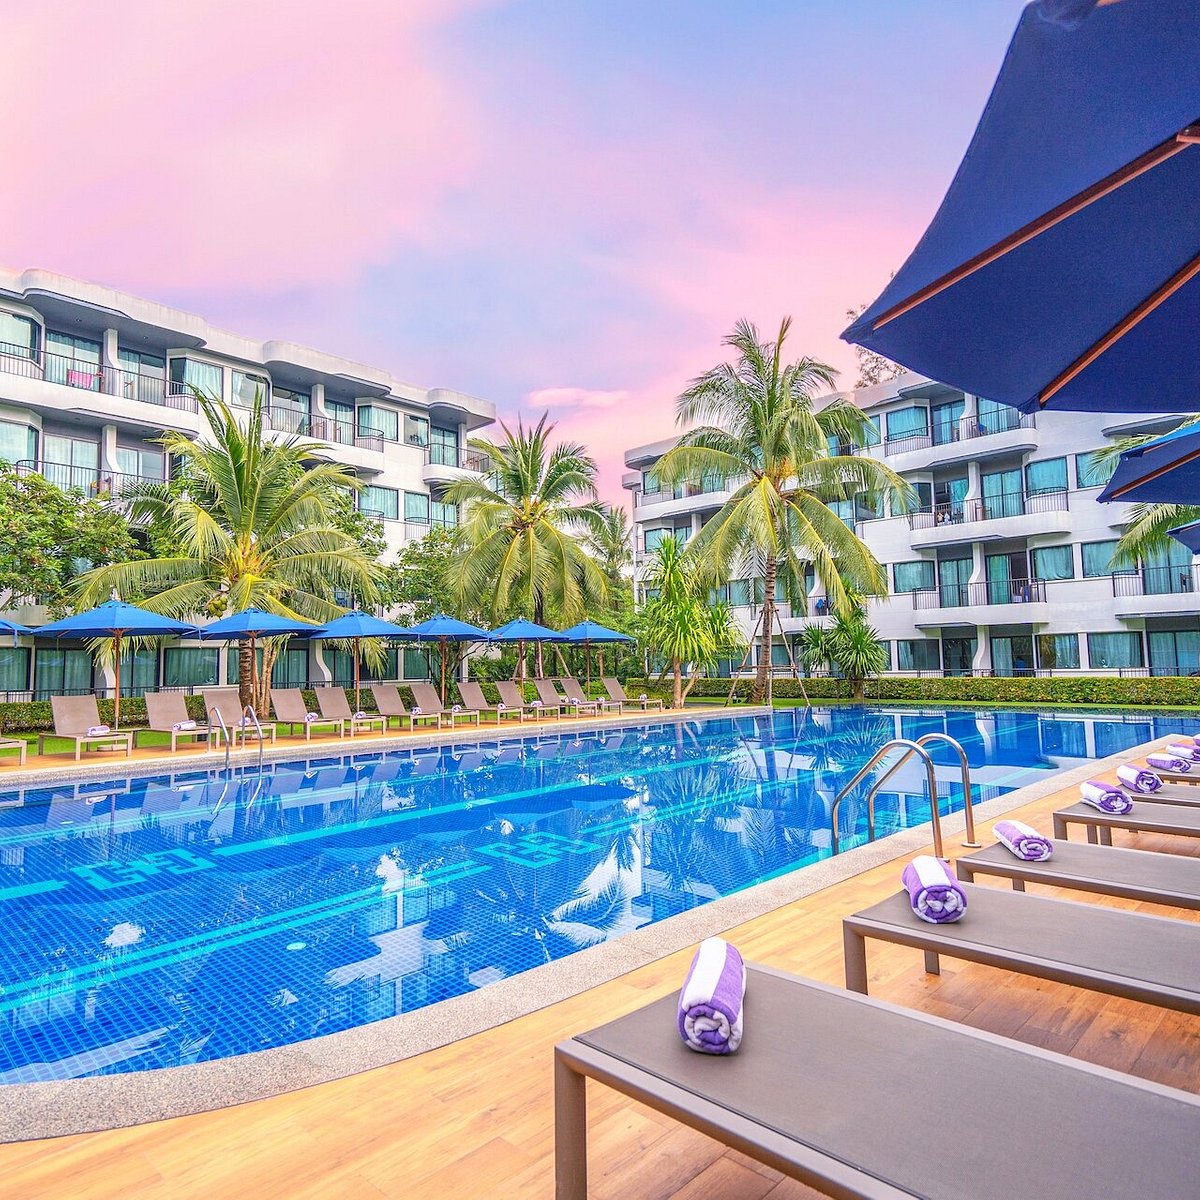 Holiday Ao Nang Beach Resort, Krabi (อ่าวนาง, ไทย) - รีวิว - Tripadvisor